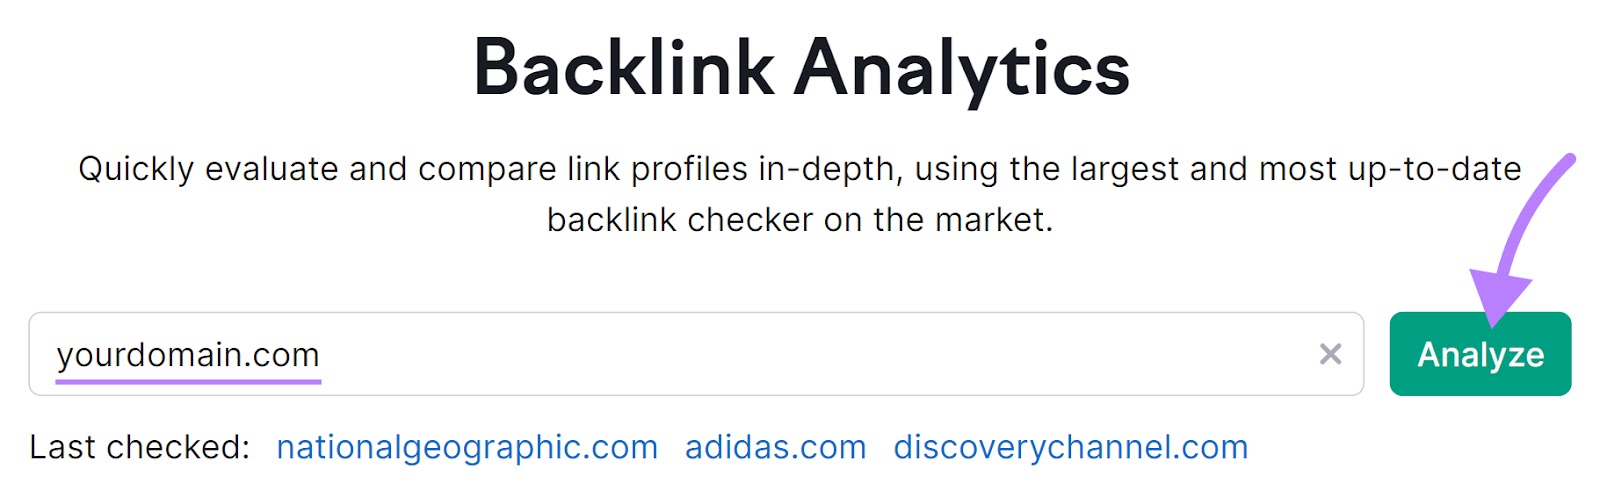 Backlink Analytics instrumentality   hunt  bar